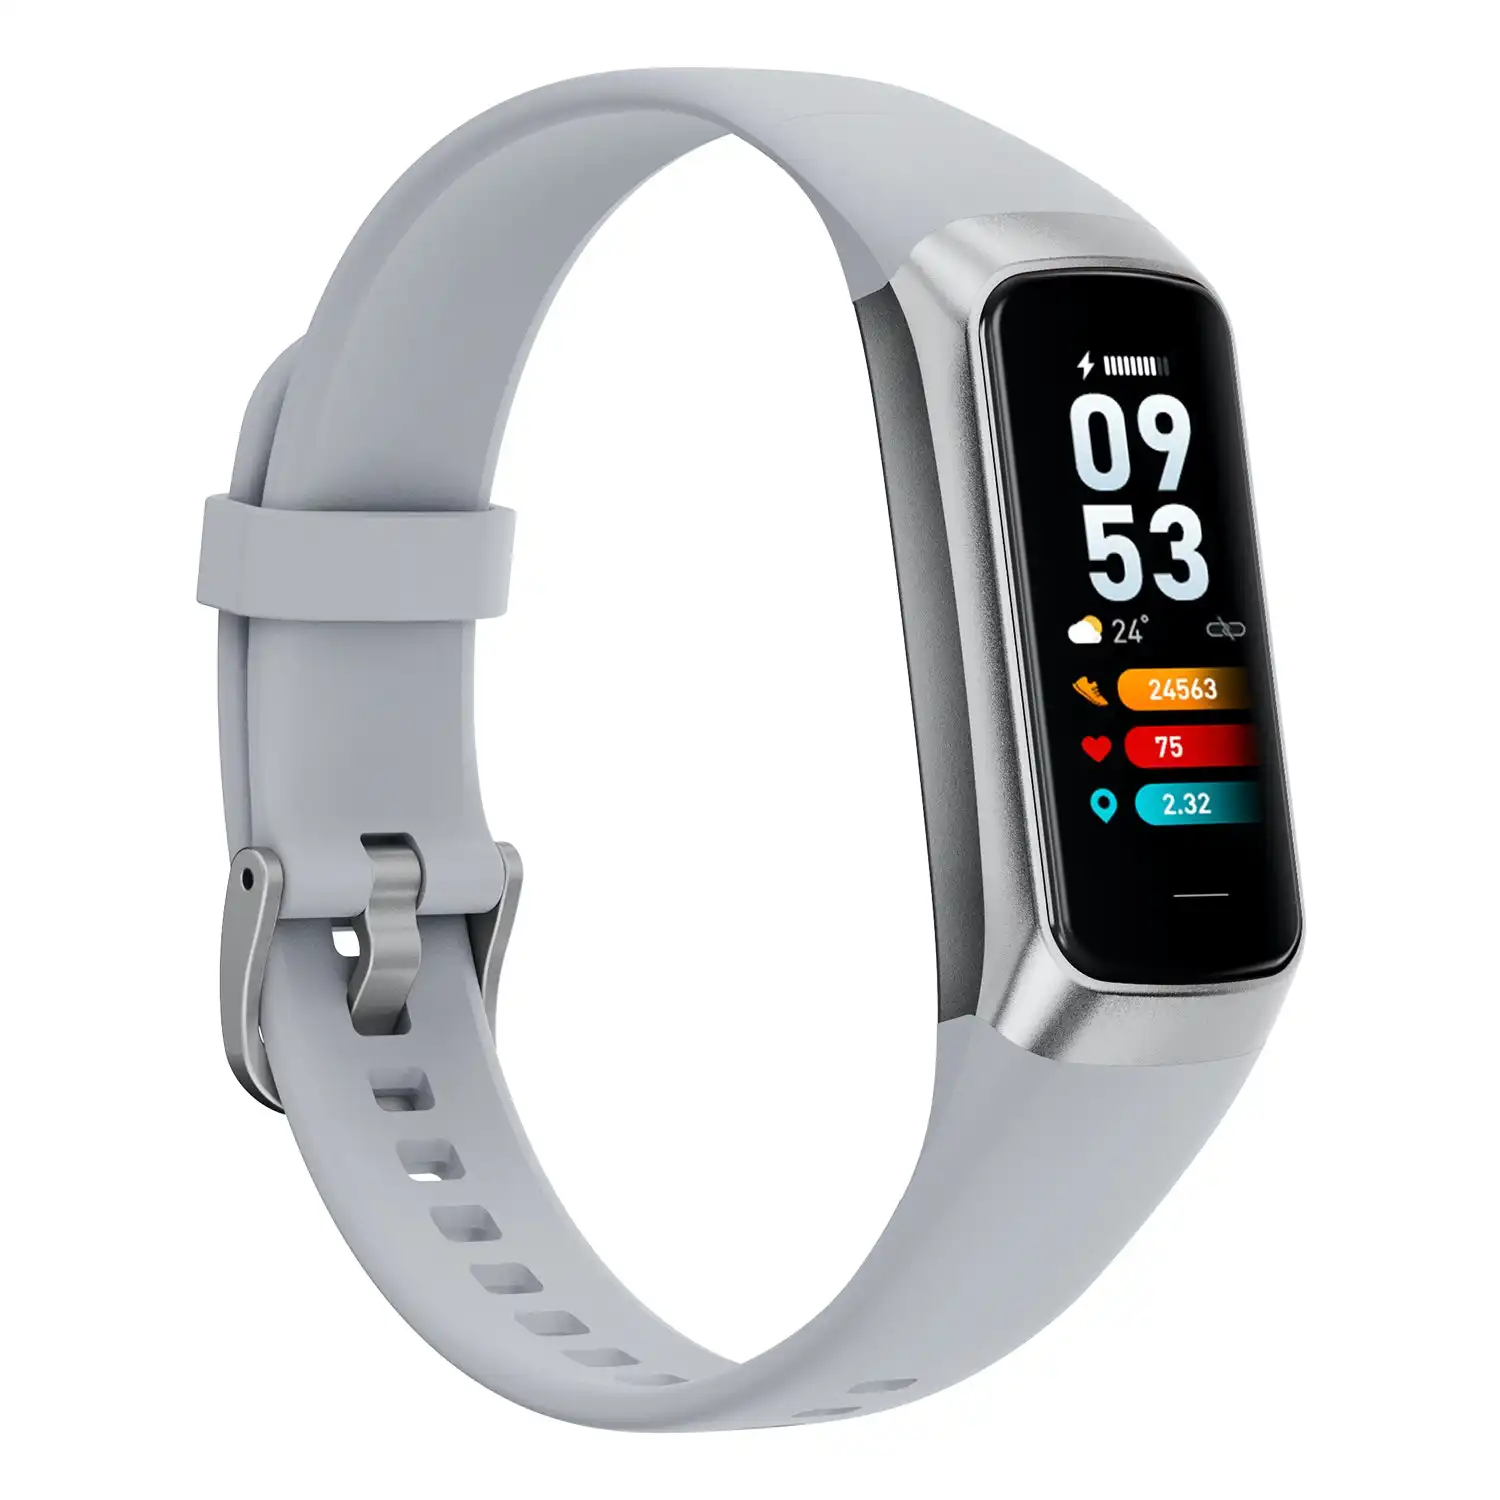 TODO Fitness Tracker Smart Watch BT 5.0 Body Thermometer Temperature BPM Monitor - Silver